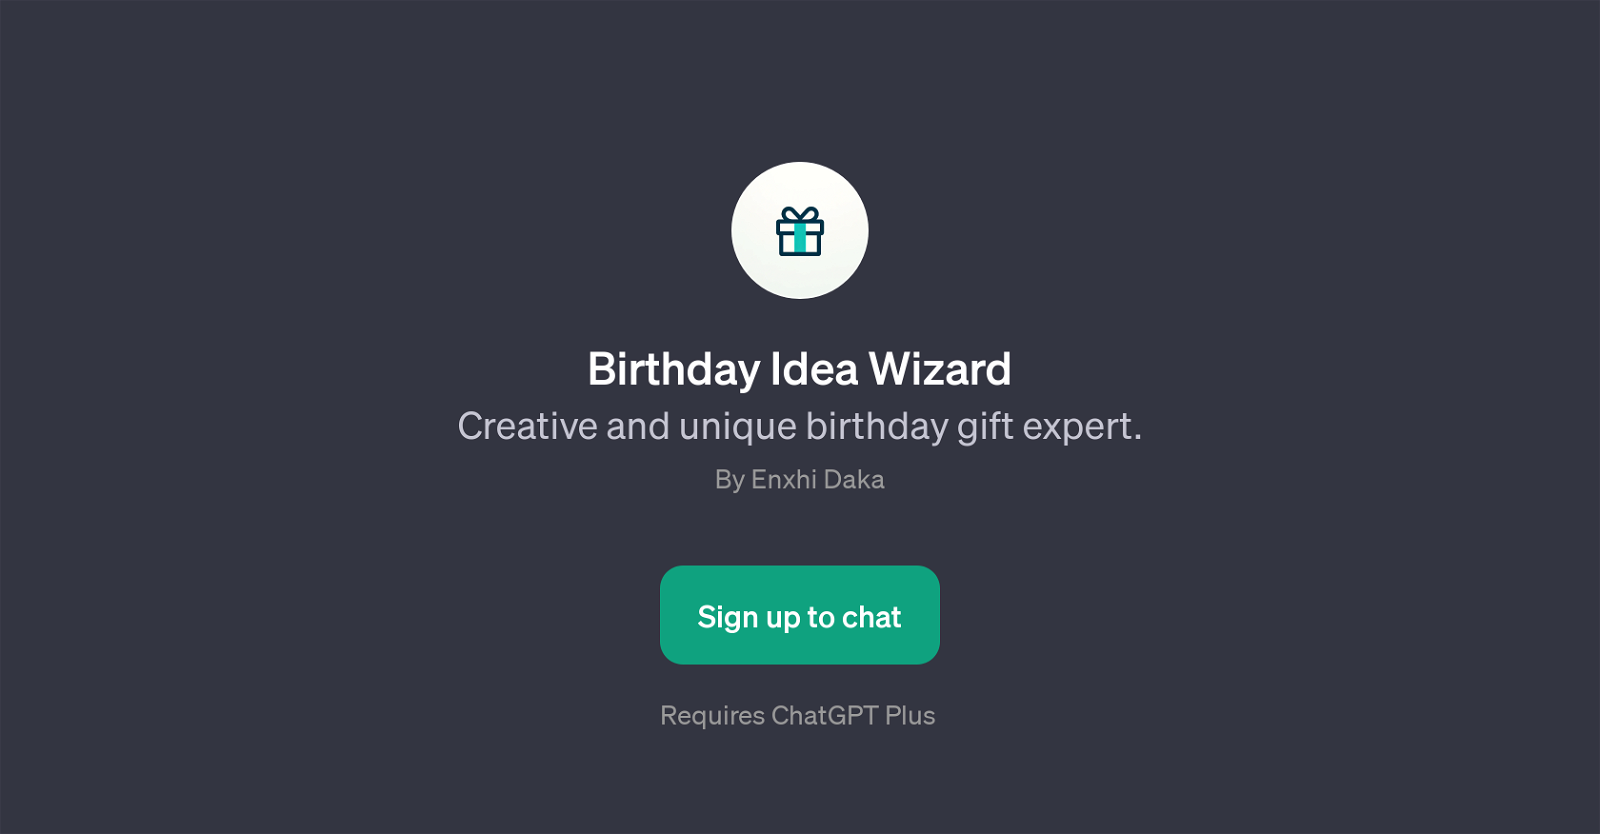 Birthday Idea Wizard website